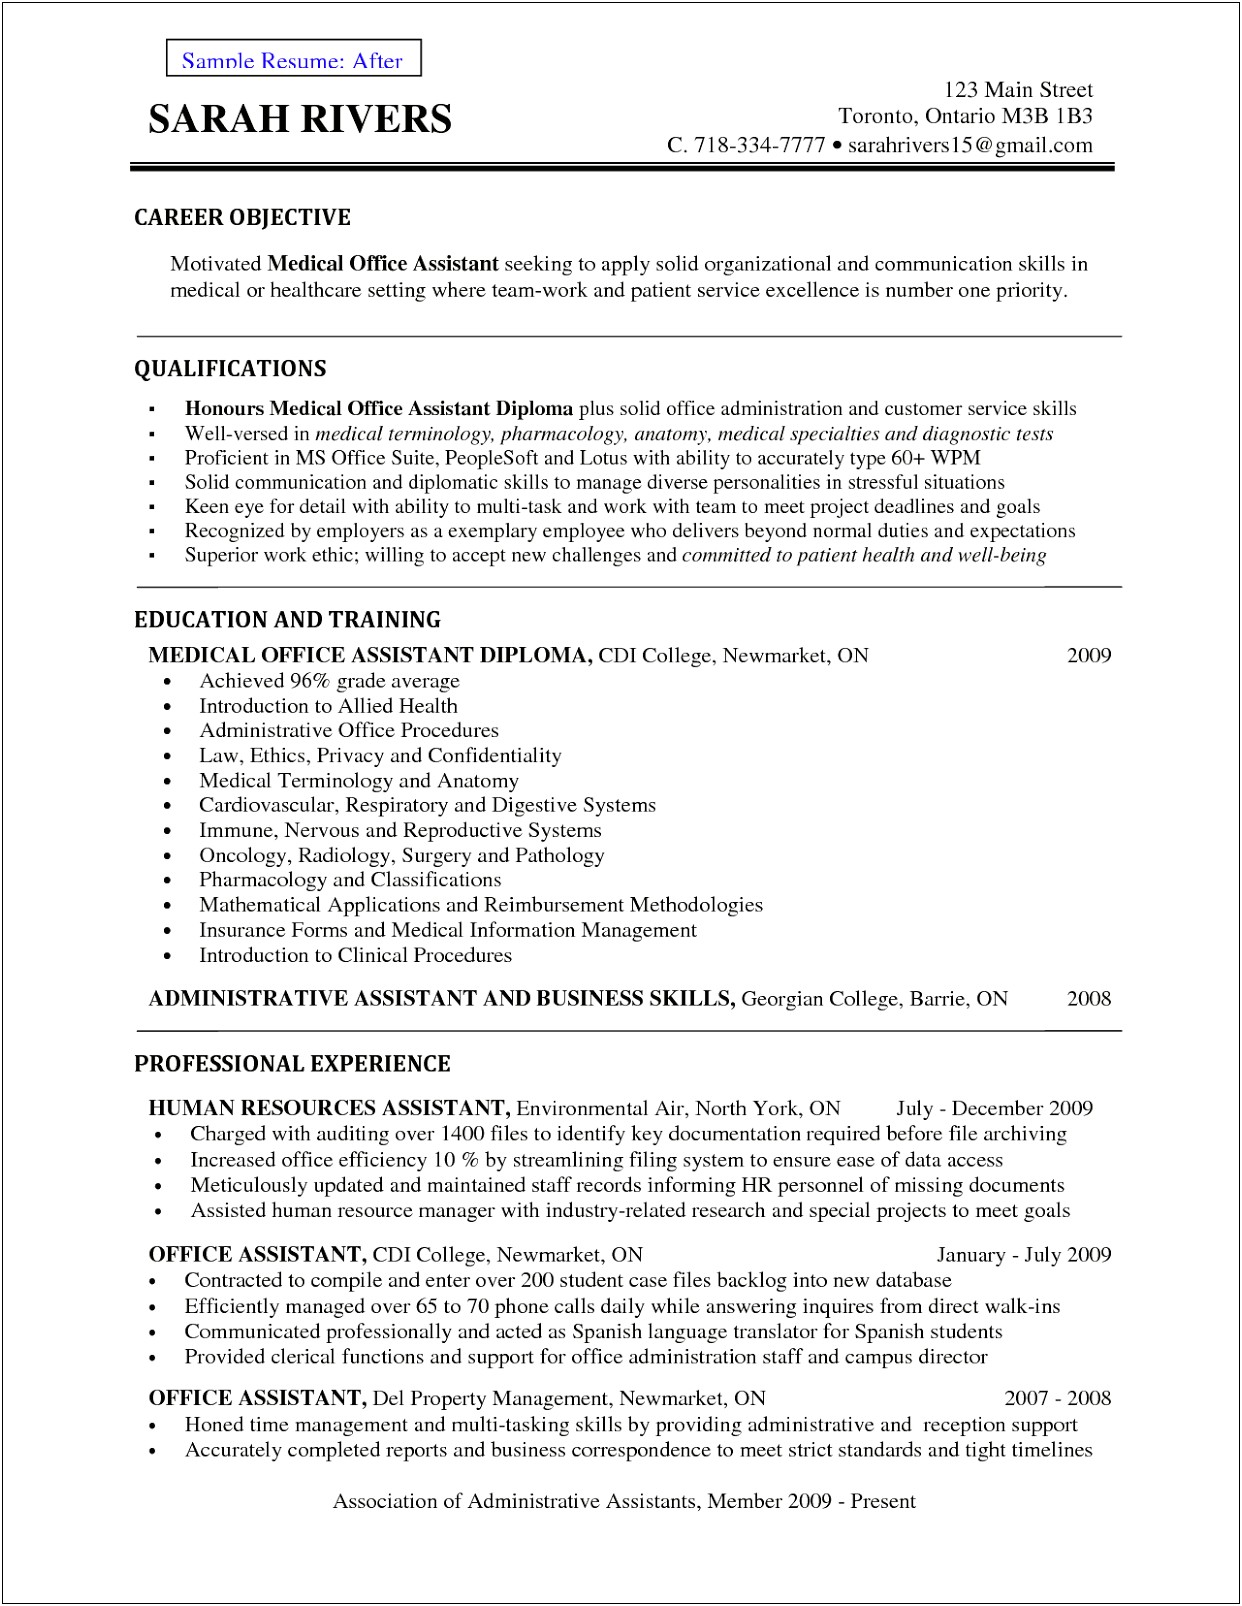 Best Resume Objectives For Medical Office